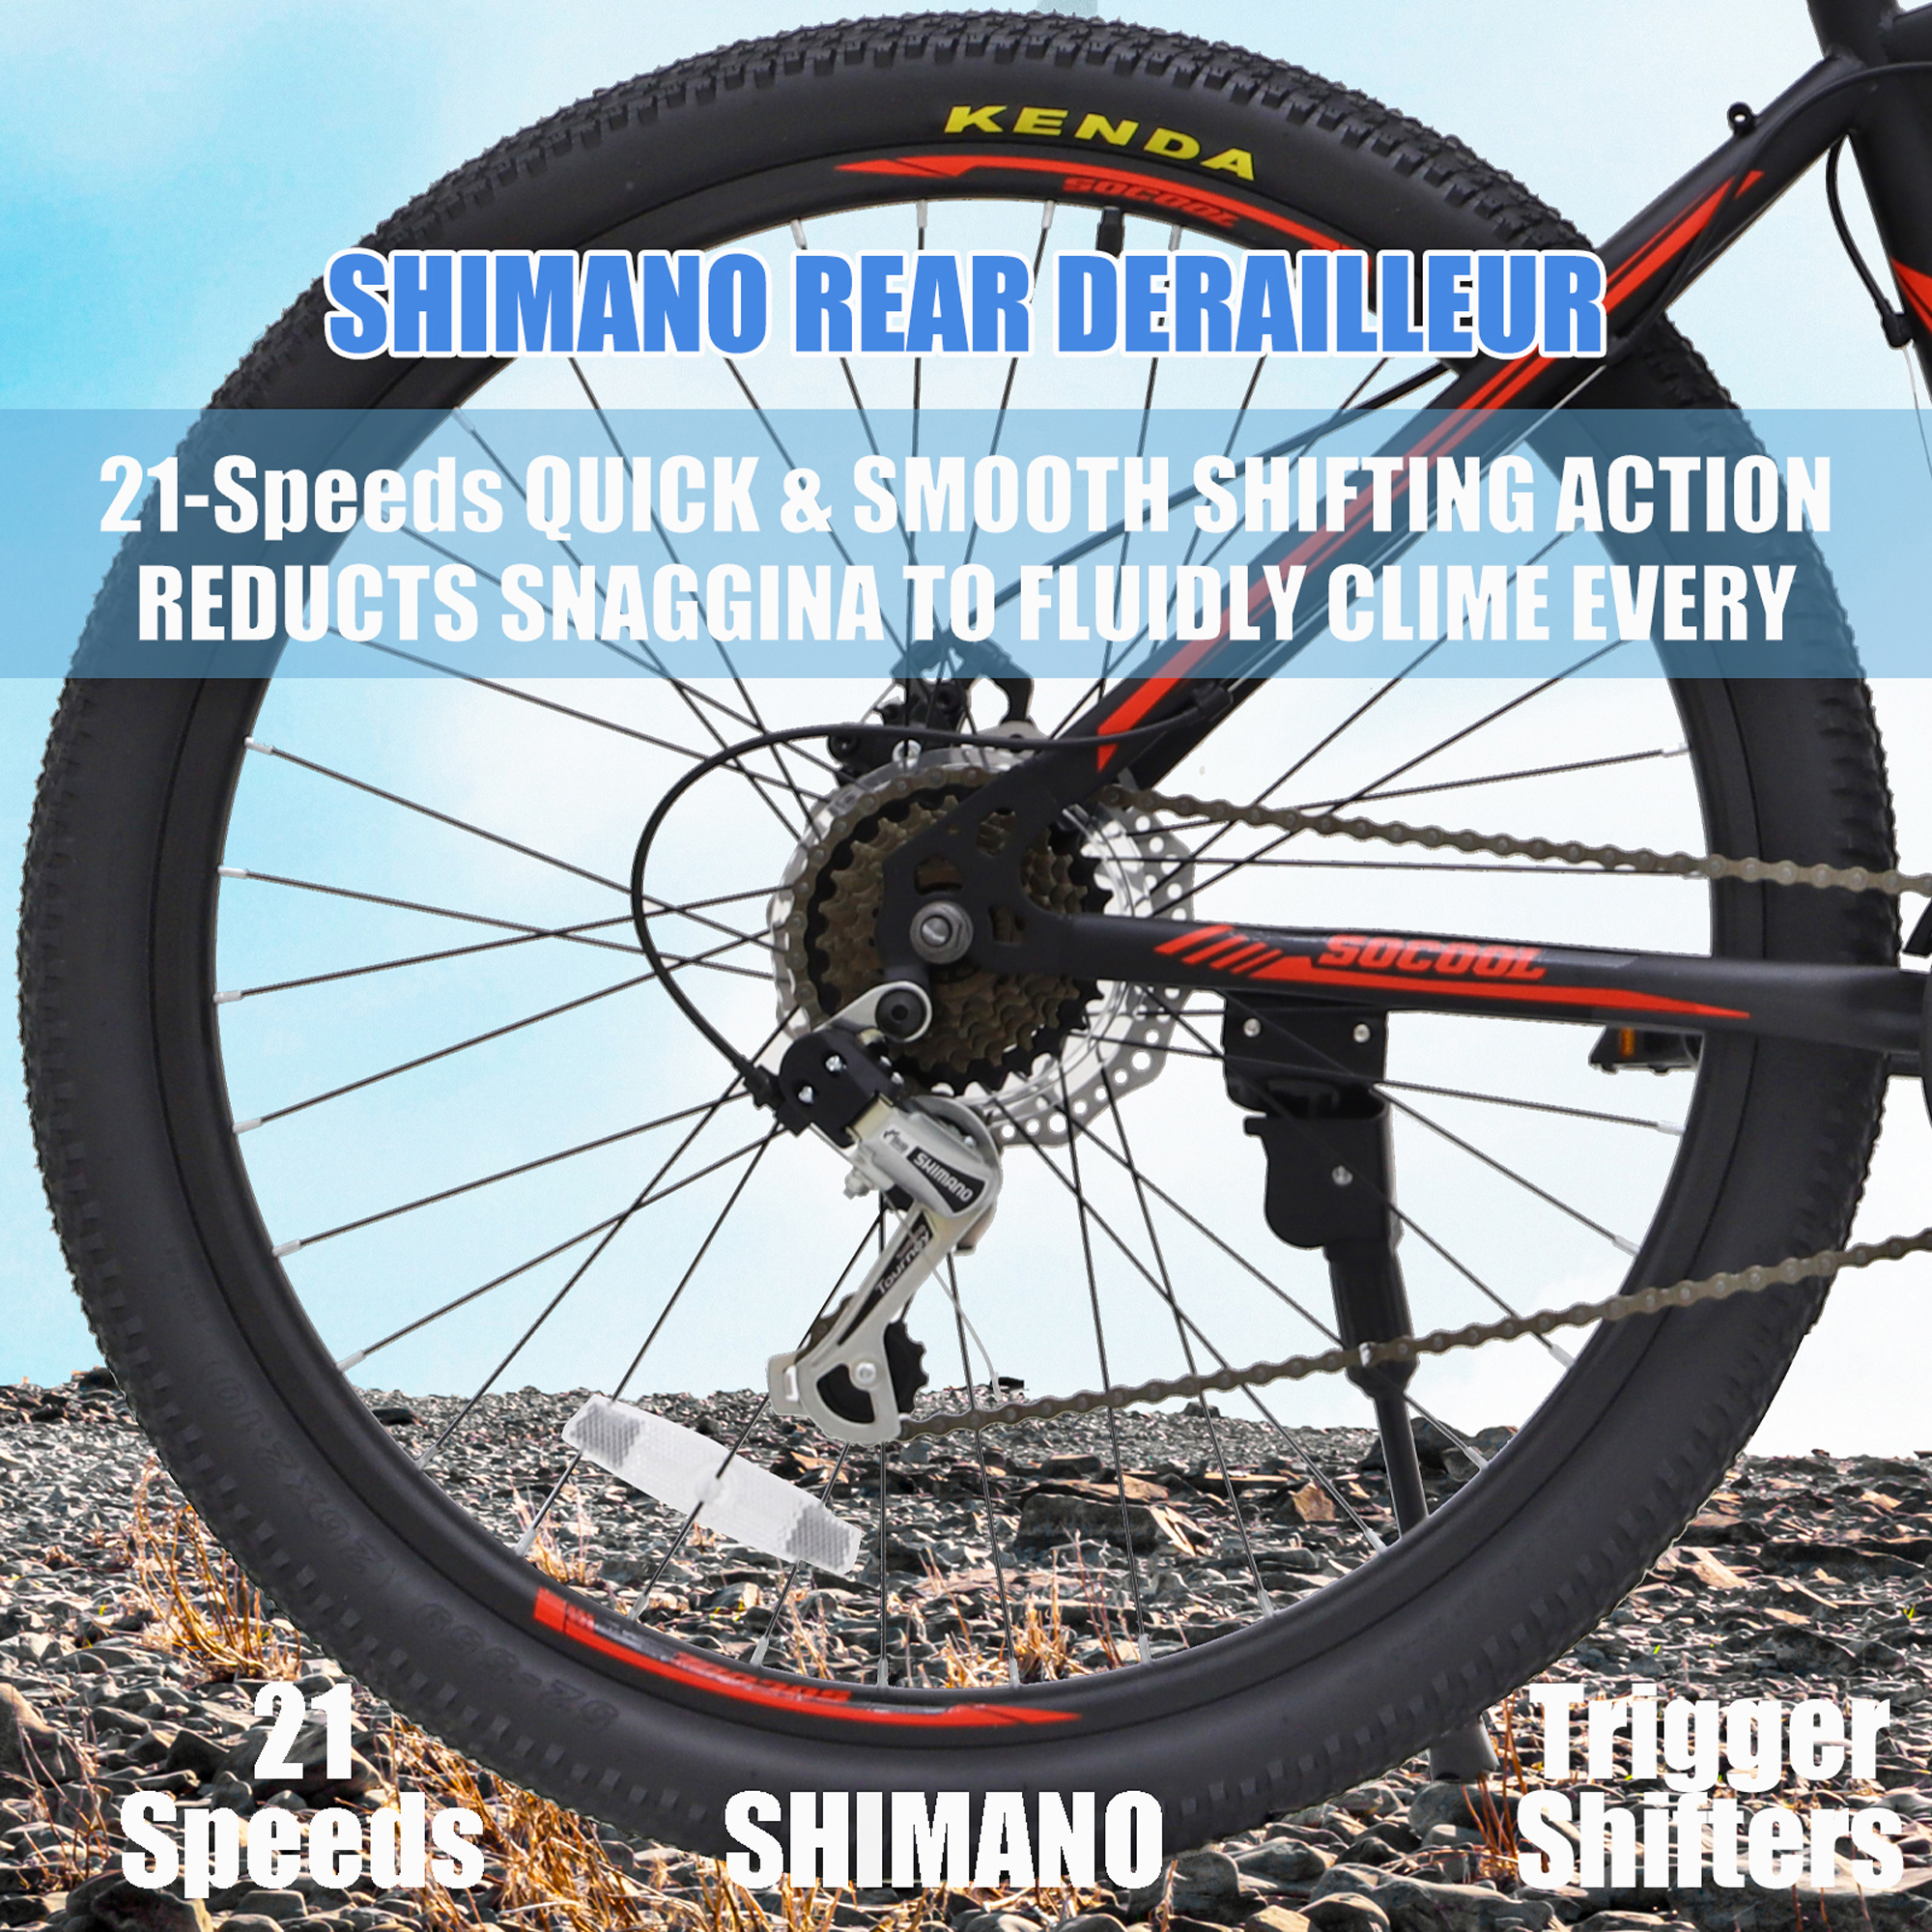 SOCOOL Mens and Womens Road Bike, 26-Inch Wheels, Lightweight Aluminum Frame -Black & Blue, KP1690BK - image 4 of 9